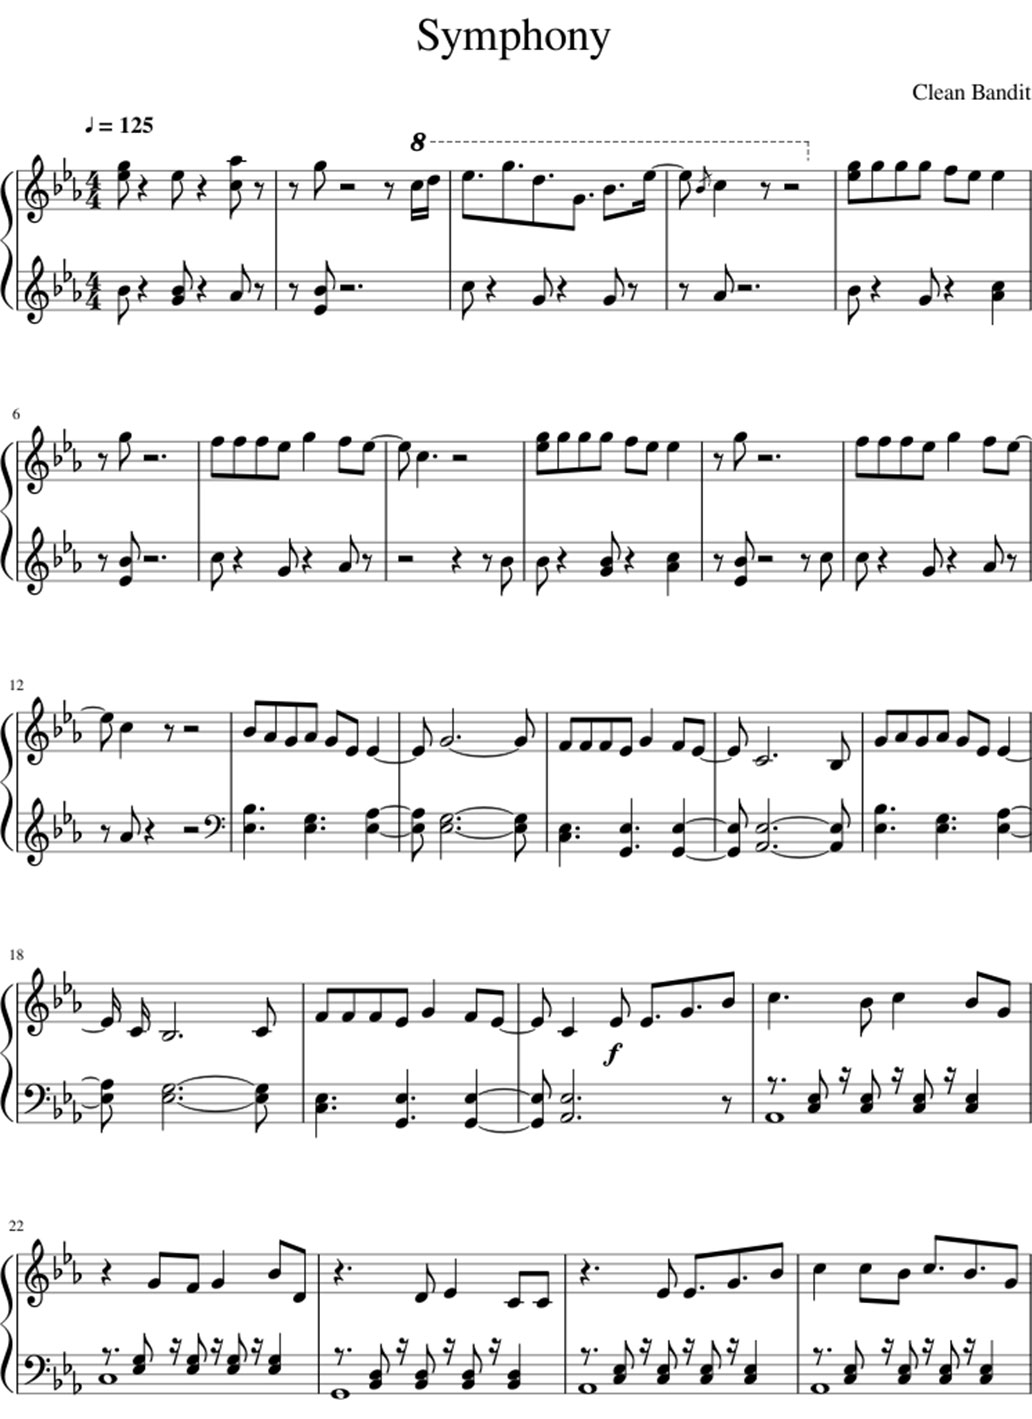 Symphony sheet music notes 1